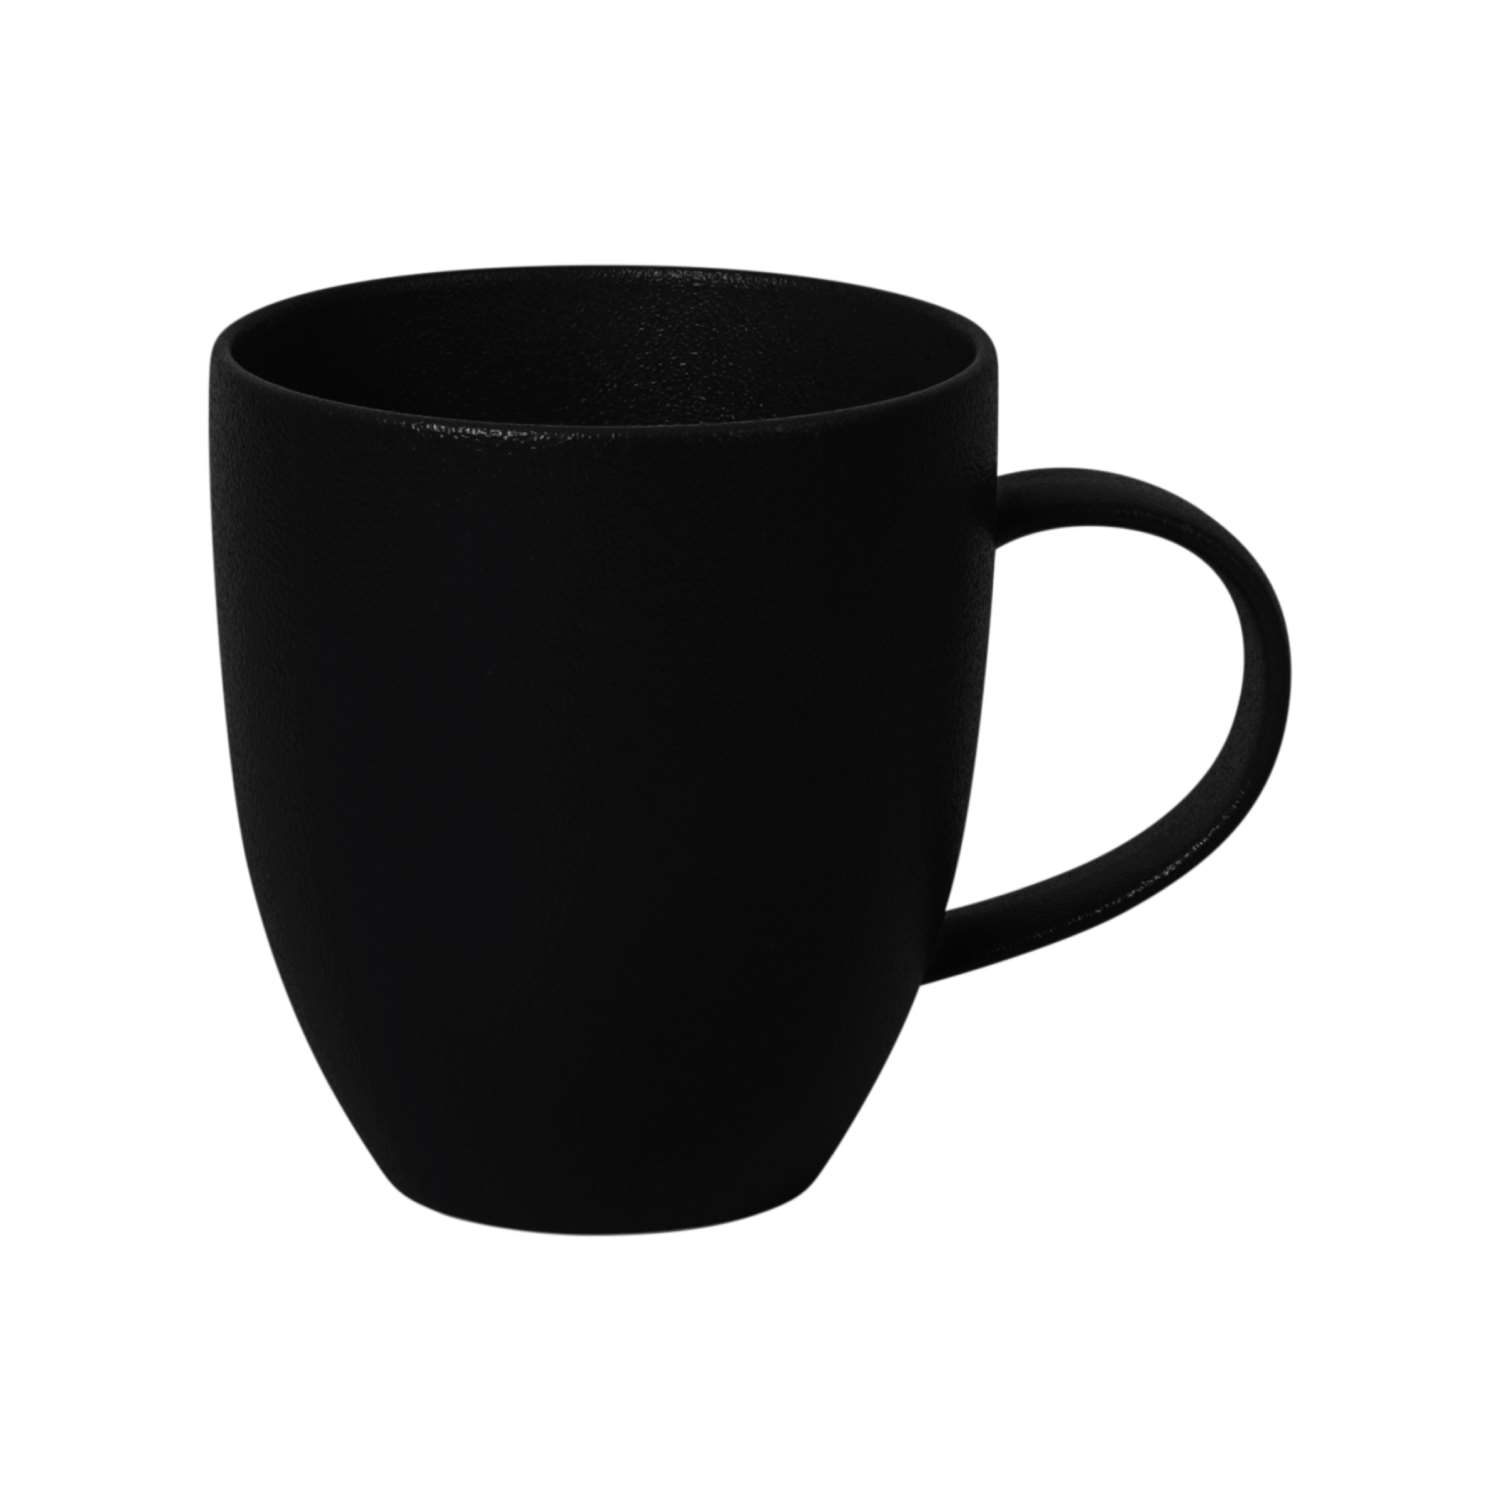 Baralee Black Sand Coupe Mug 350 Cc (11 3/4 Oz)